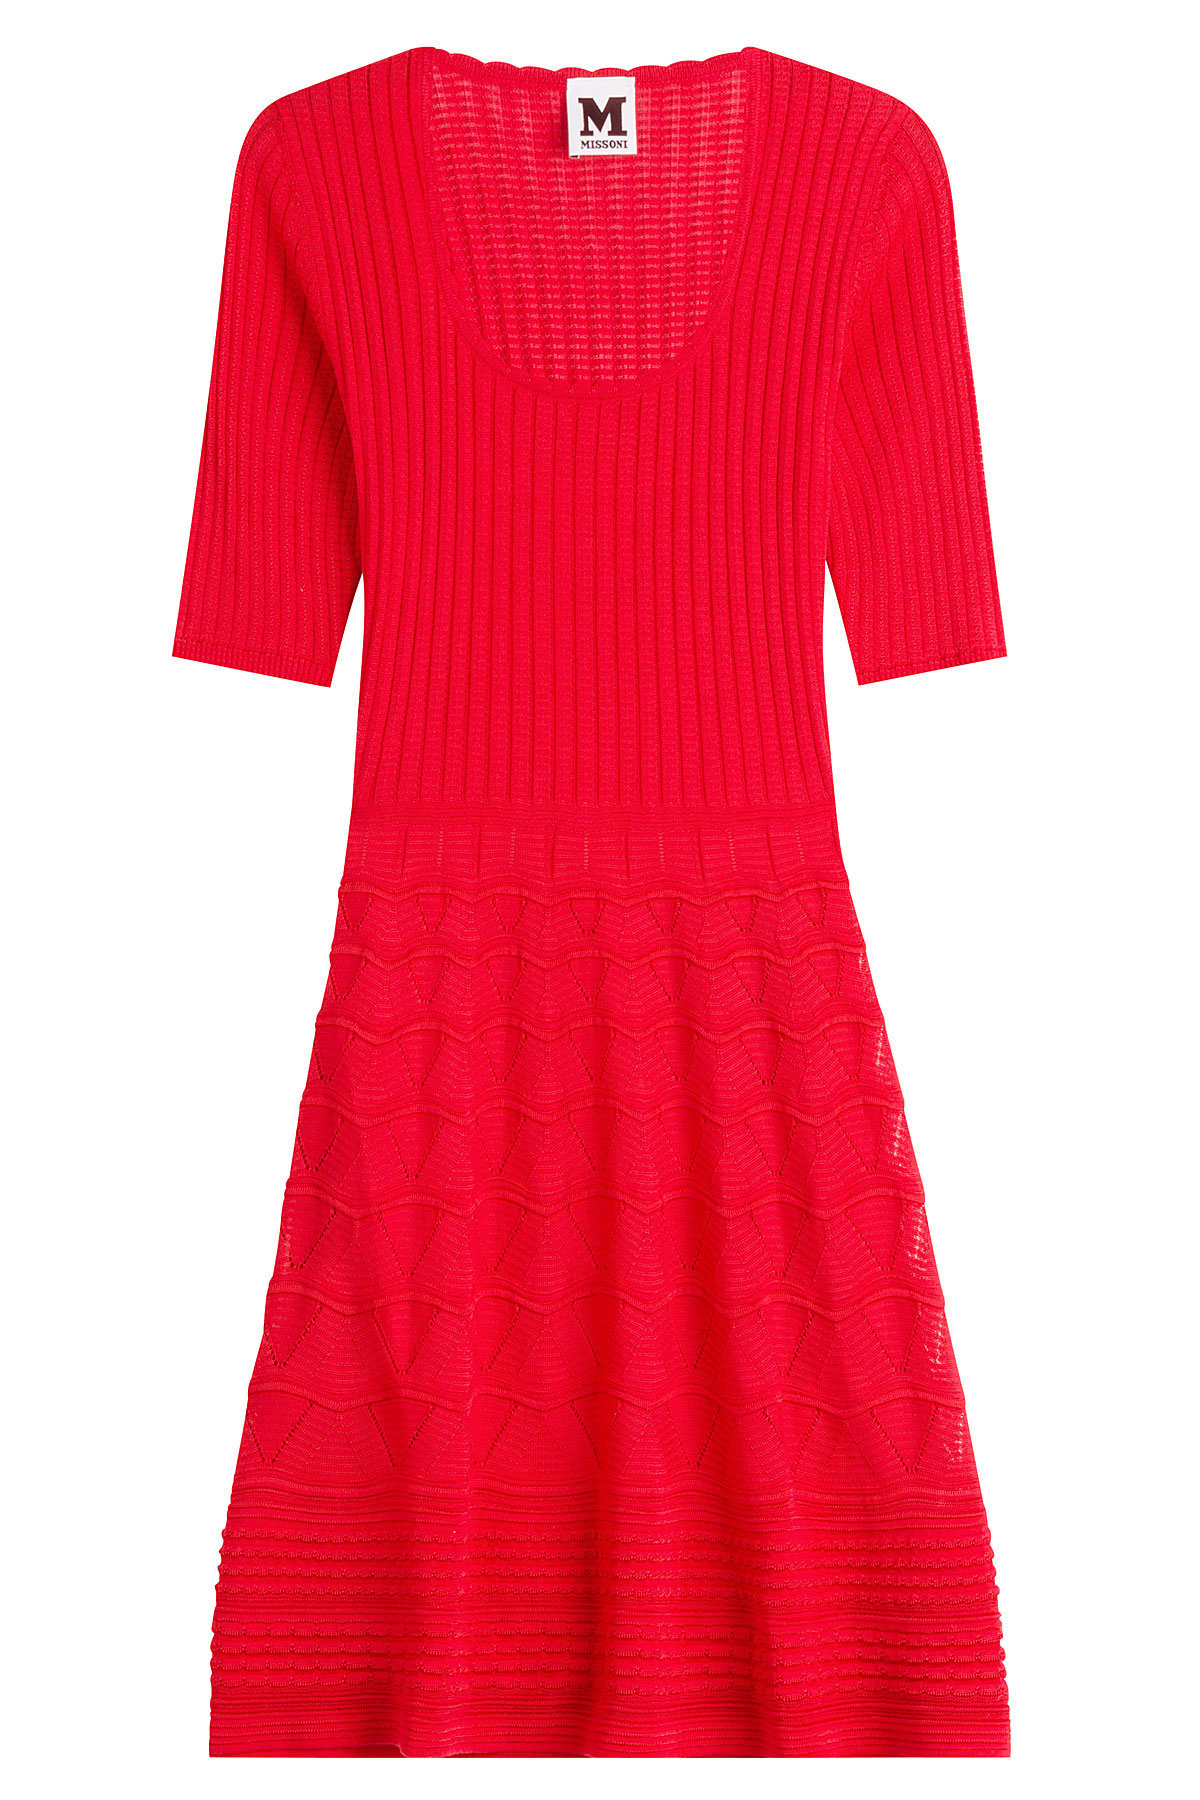 M Missoni - Cotton-Blend Knit Dress